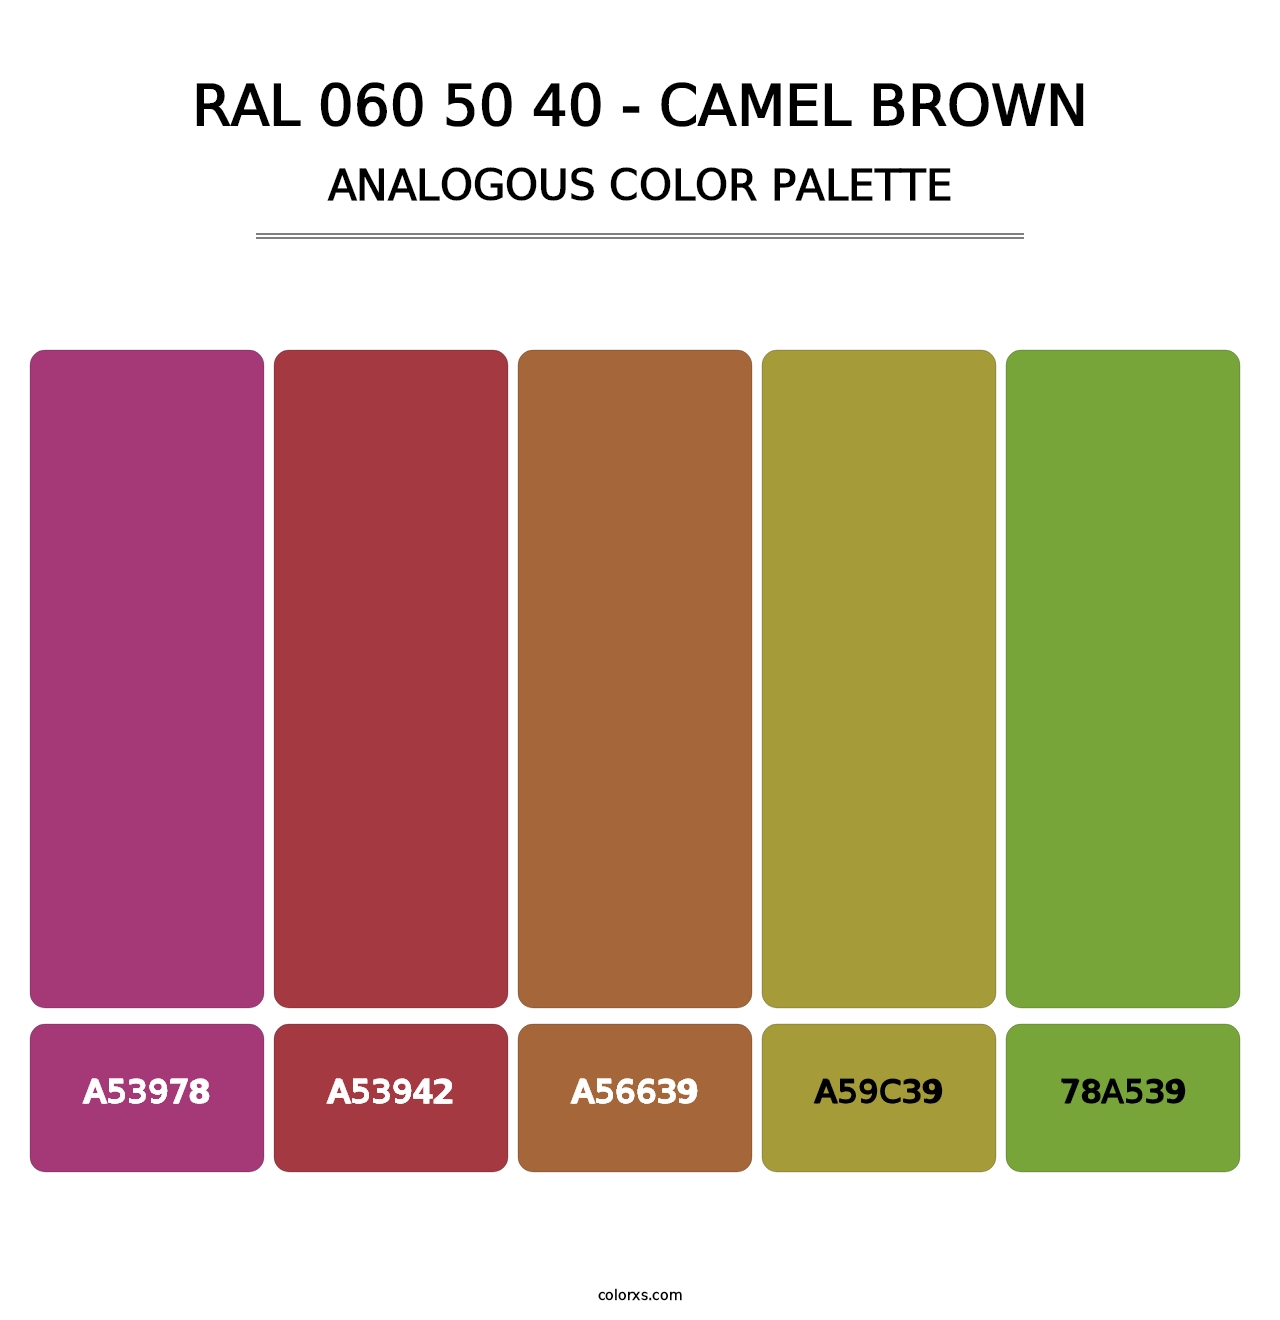 RAL 060 50 40 - Camel Brown - Analogous Color Palette